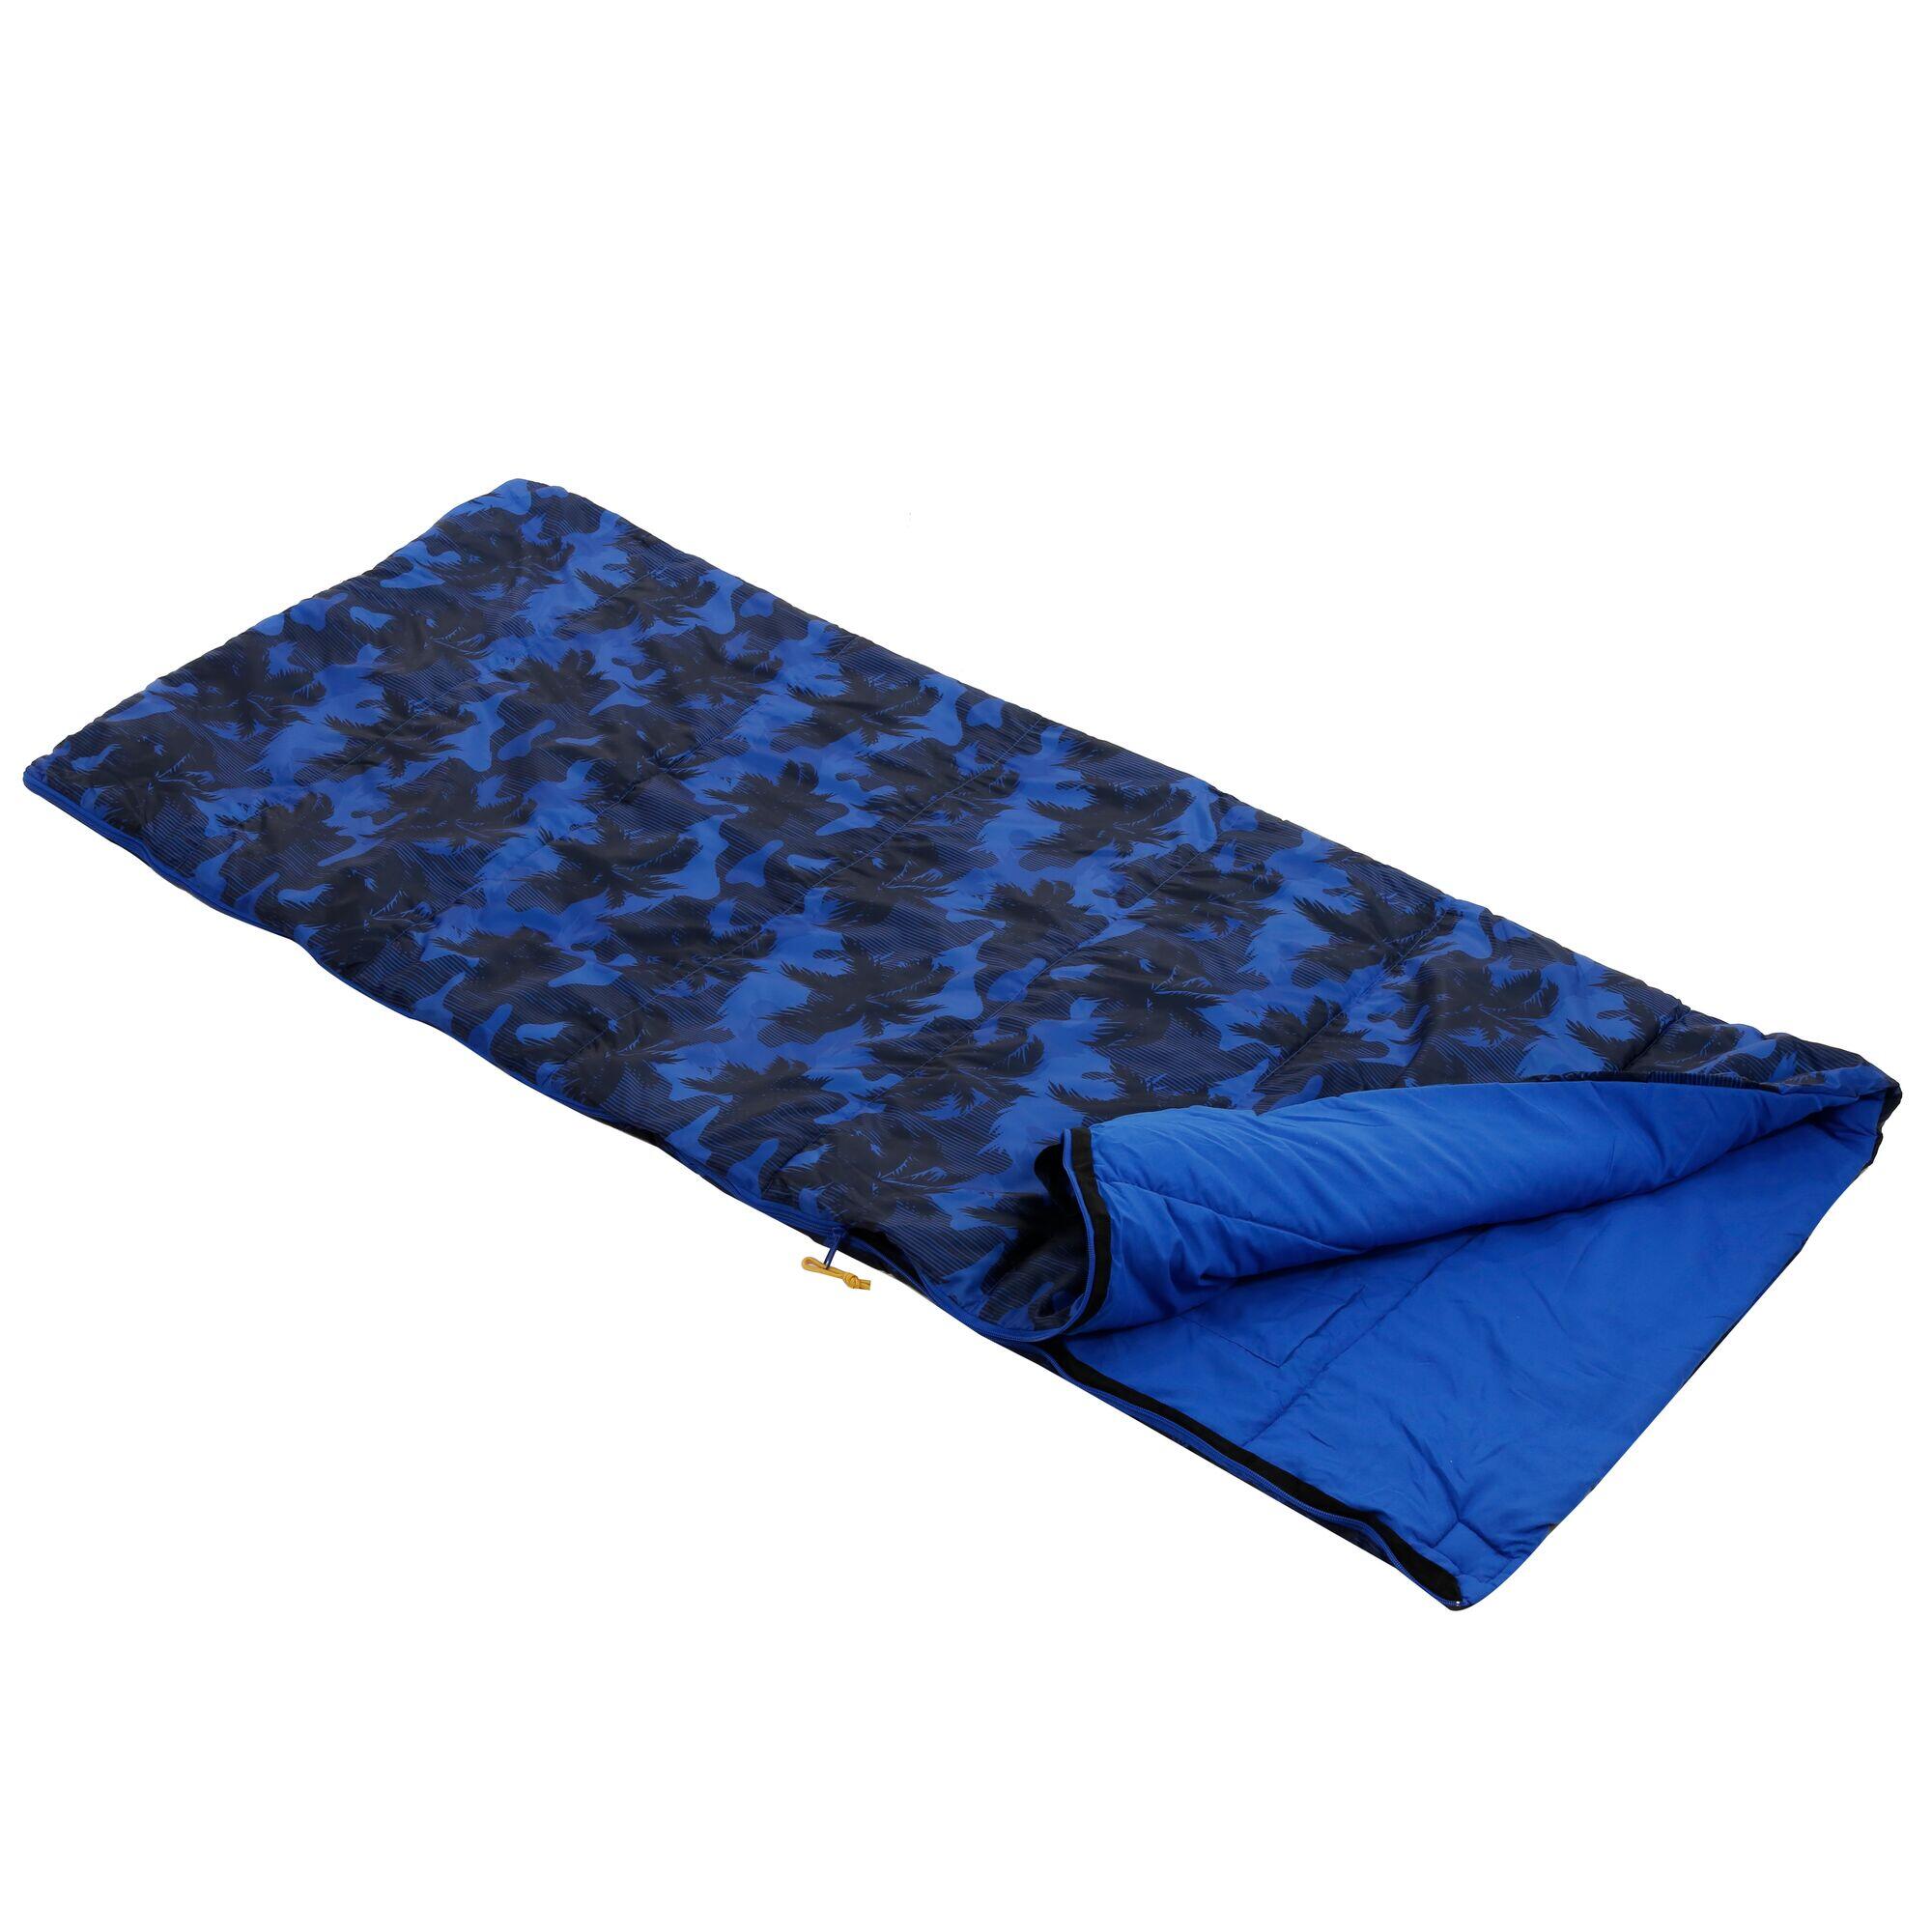 REGATTA Maui Kids Kids' Camping Sleeping Bag - Oxford Blue Palm Tree Print